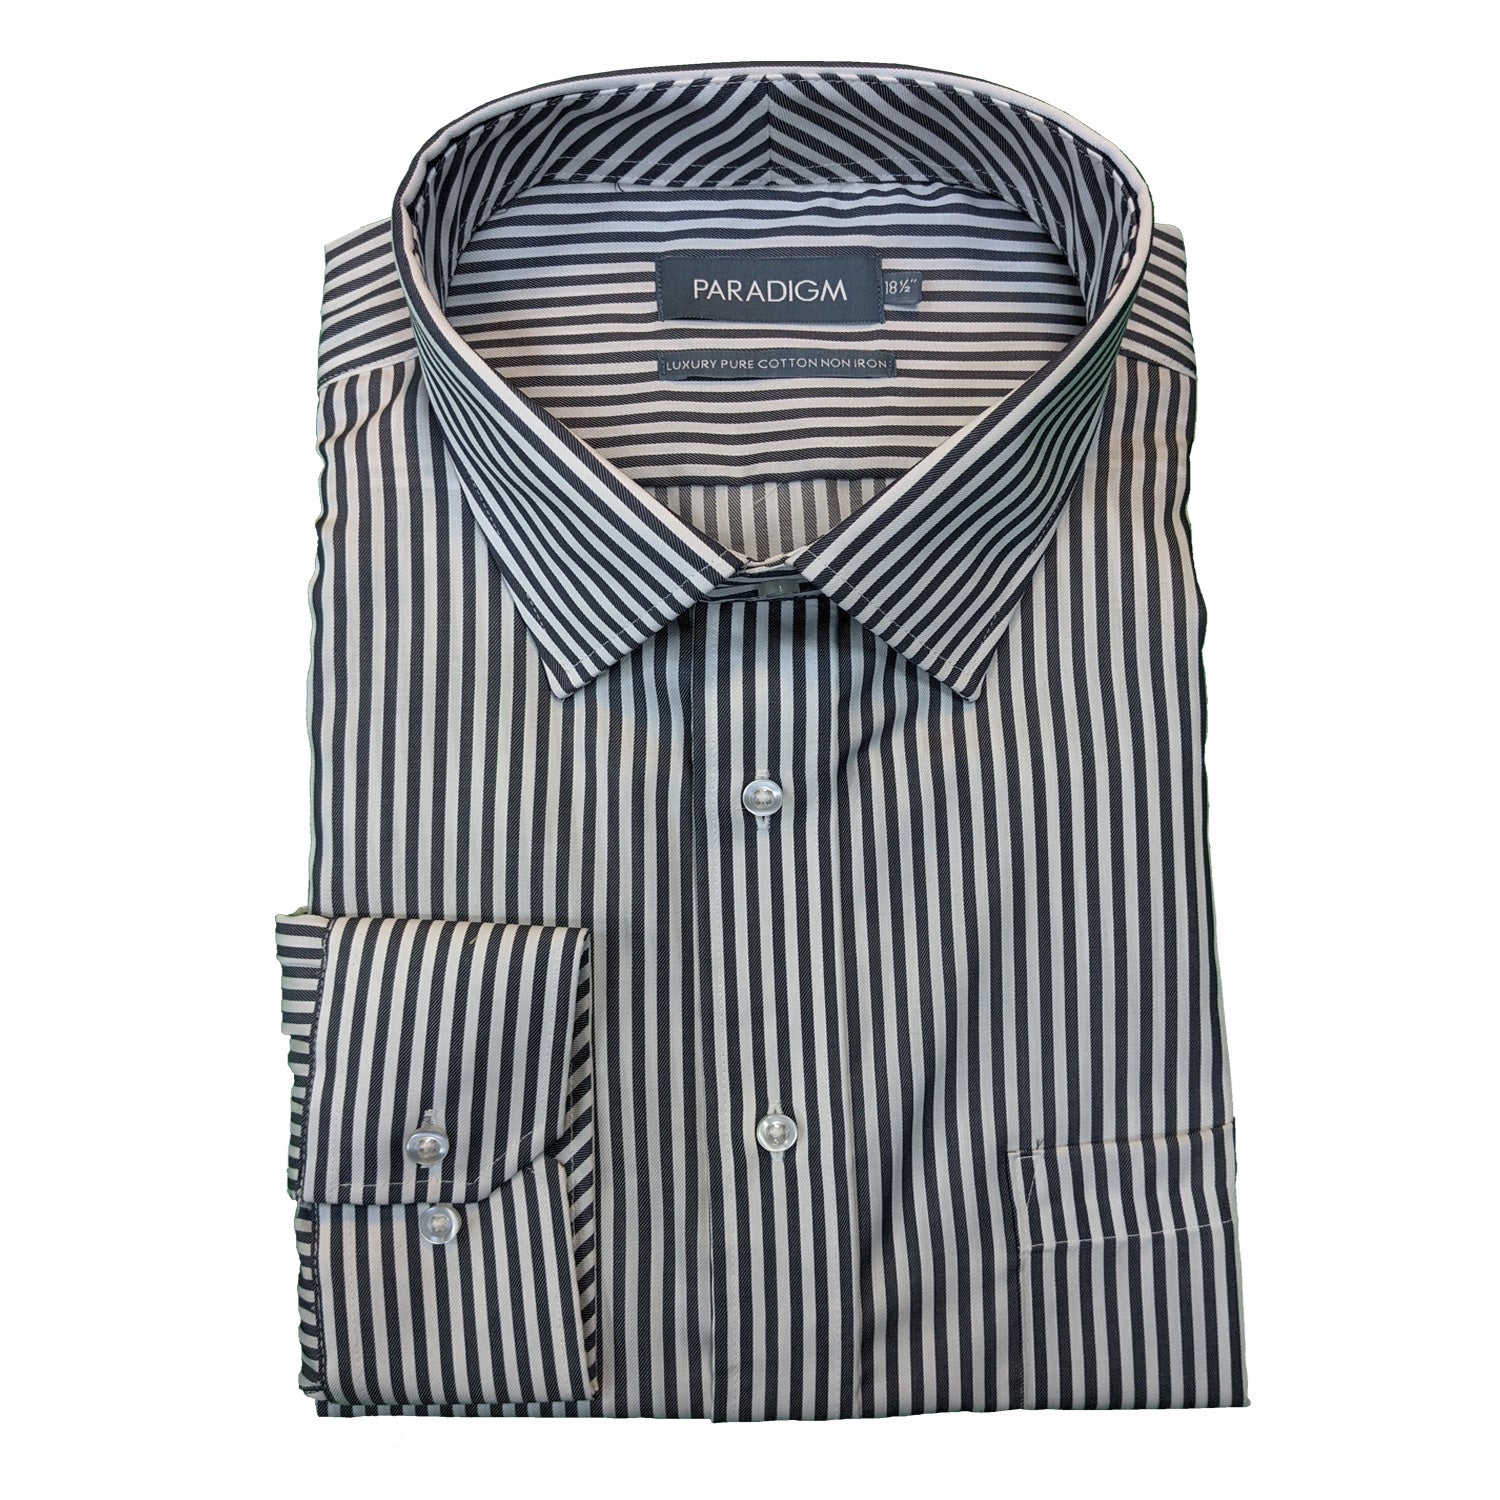 Paradigm Stripe Shirt - CX7030 - Charcoal 1